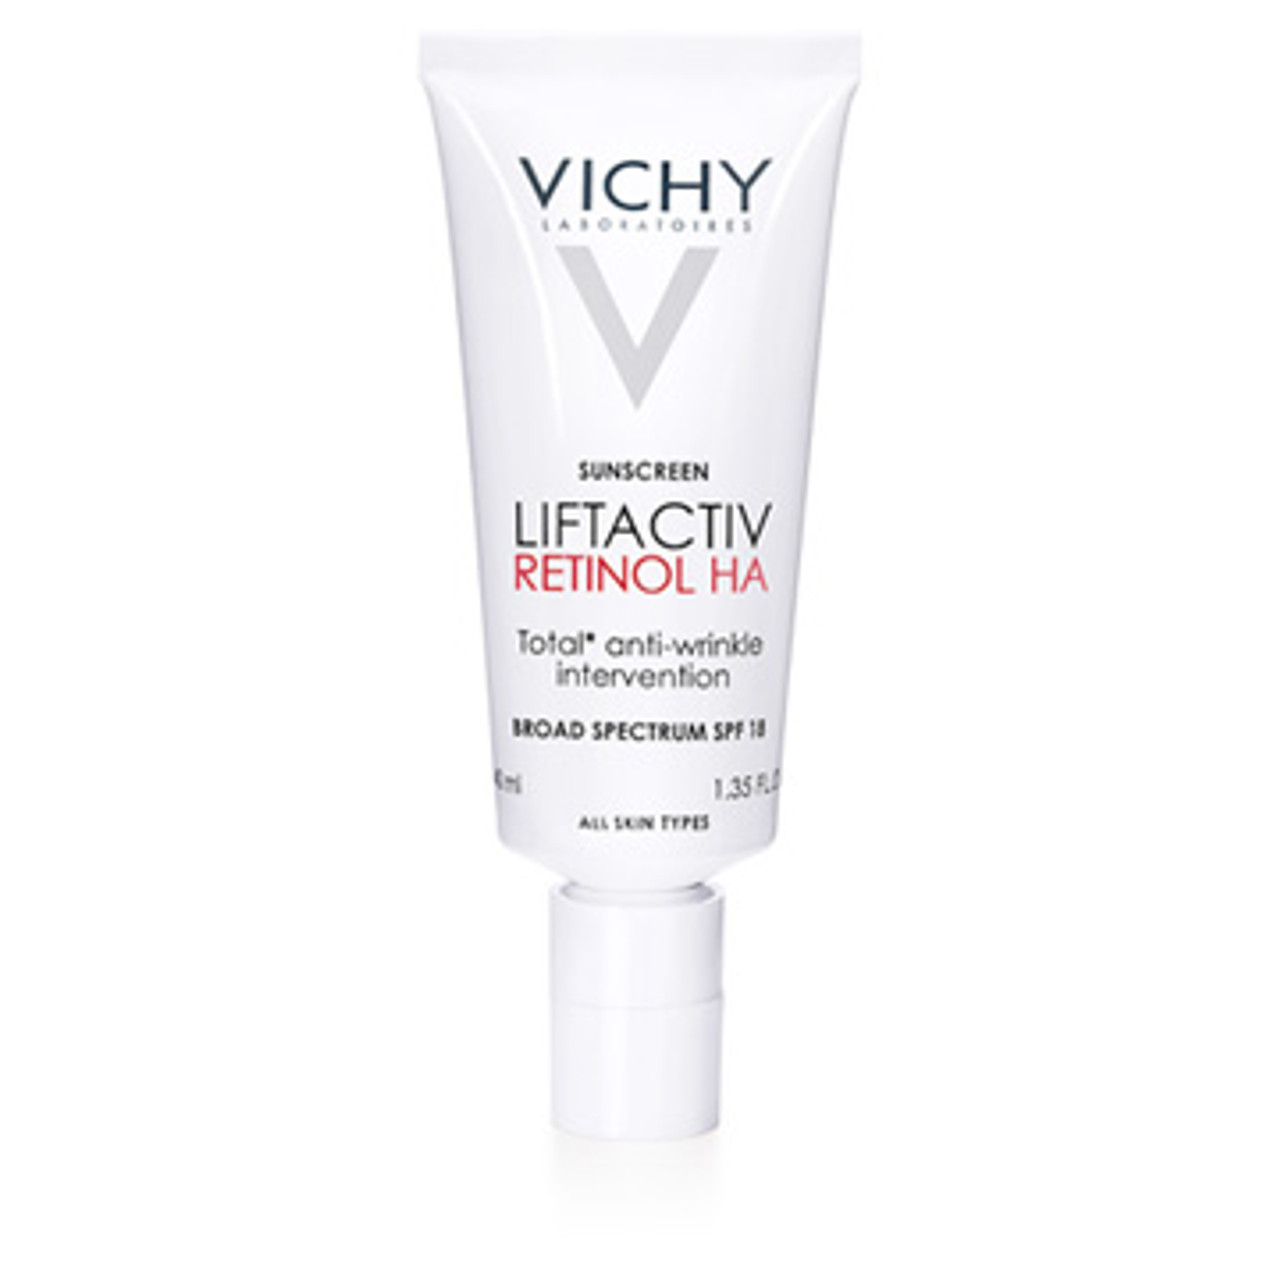 Vichy LiftActiv Retinol HA Day SPF 18 - 1.35 (M00221) ® on Sale at $42.75 Free Samples & Reward Points